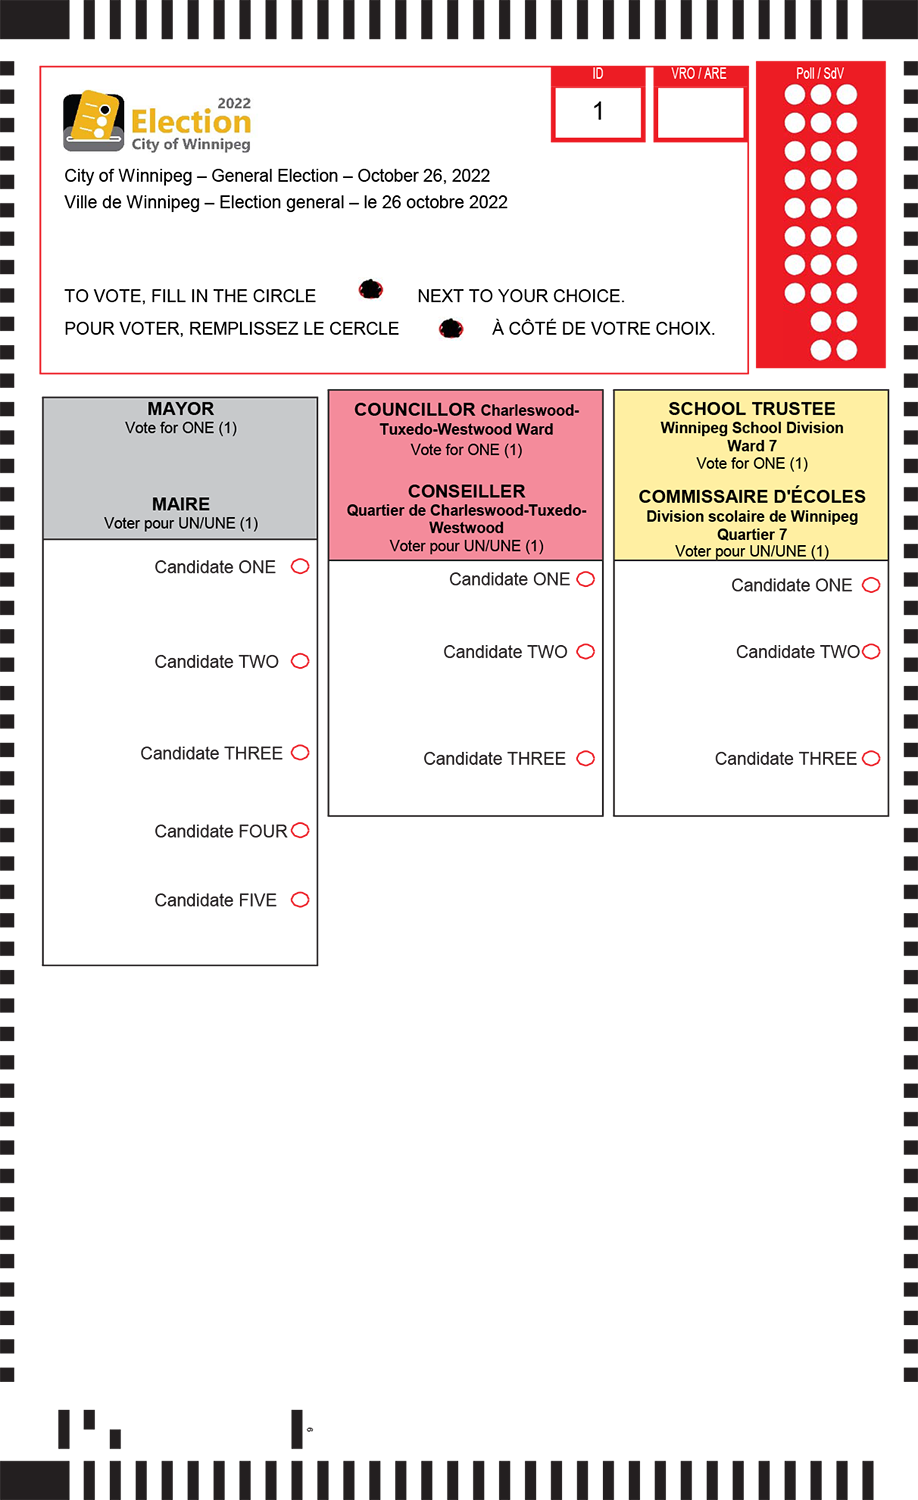 Sample ballot